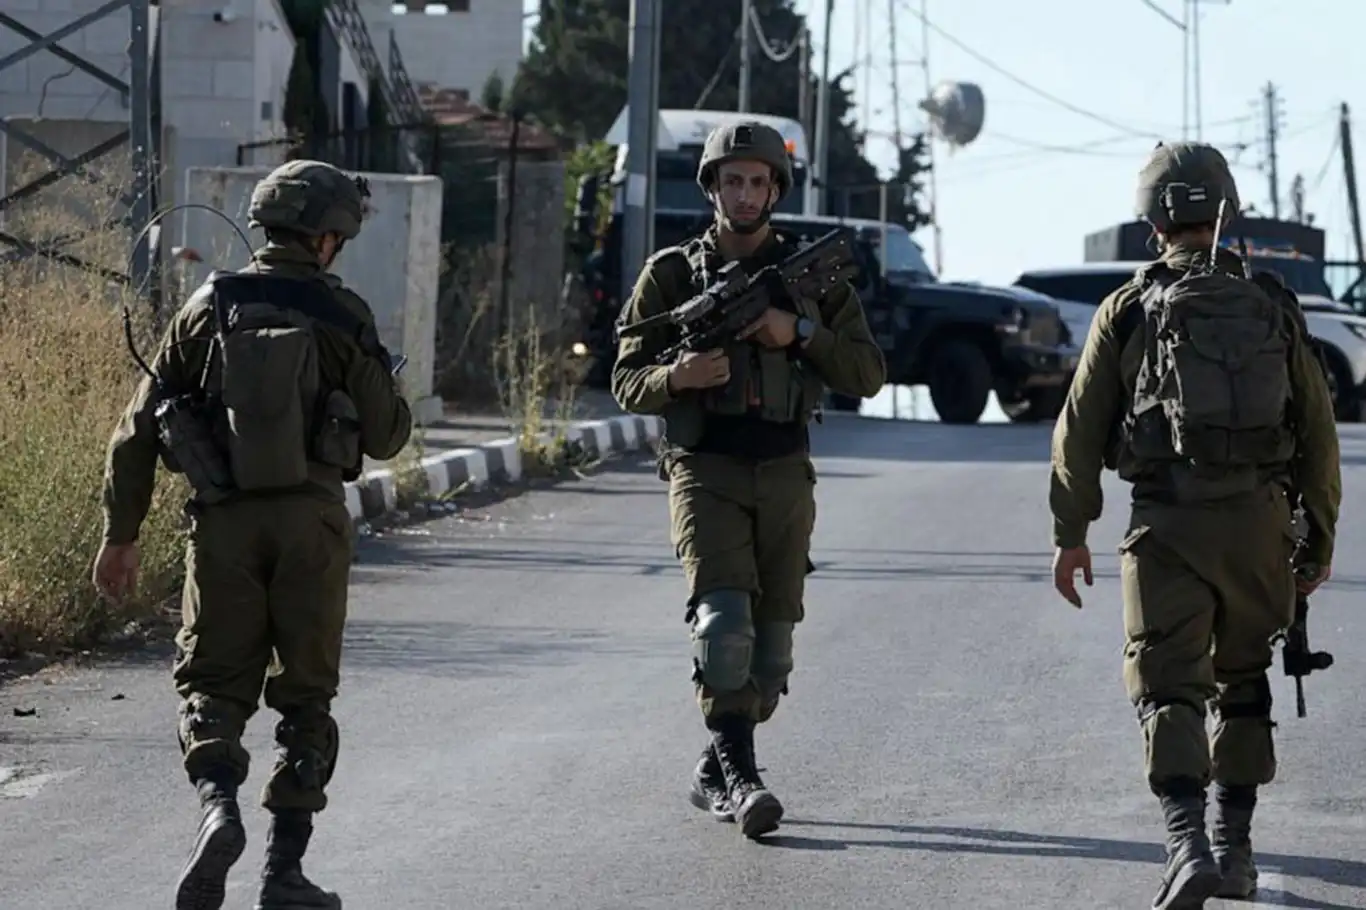 Siyonist rejim Batı Şeria'da 2 Filistinliyi şehid etti